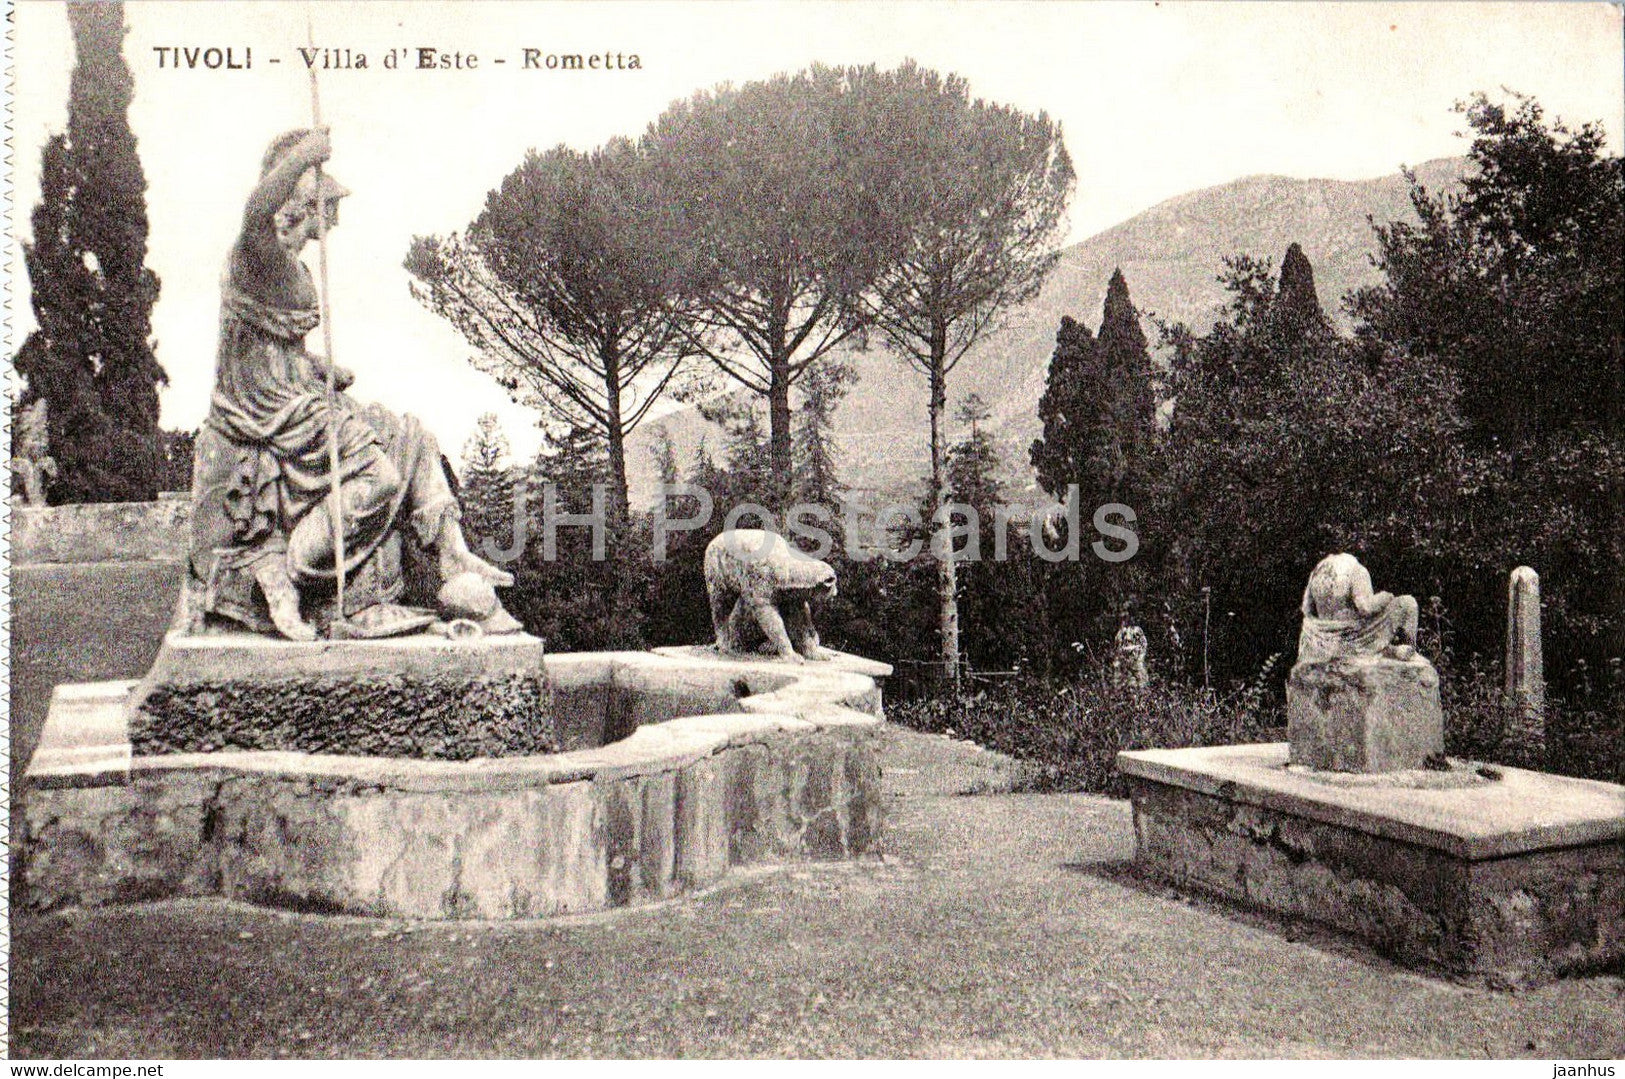 Tivoli - Villa d'Este - Rometta - 205 - old postcard - Italy - unused - JH Postcards